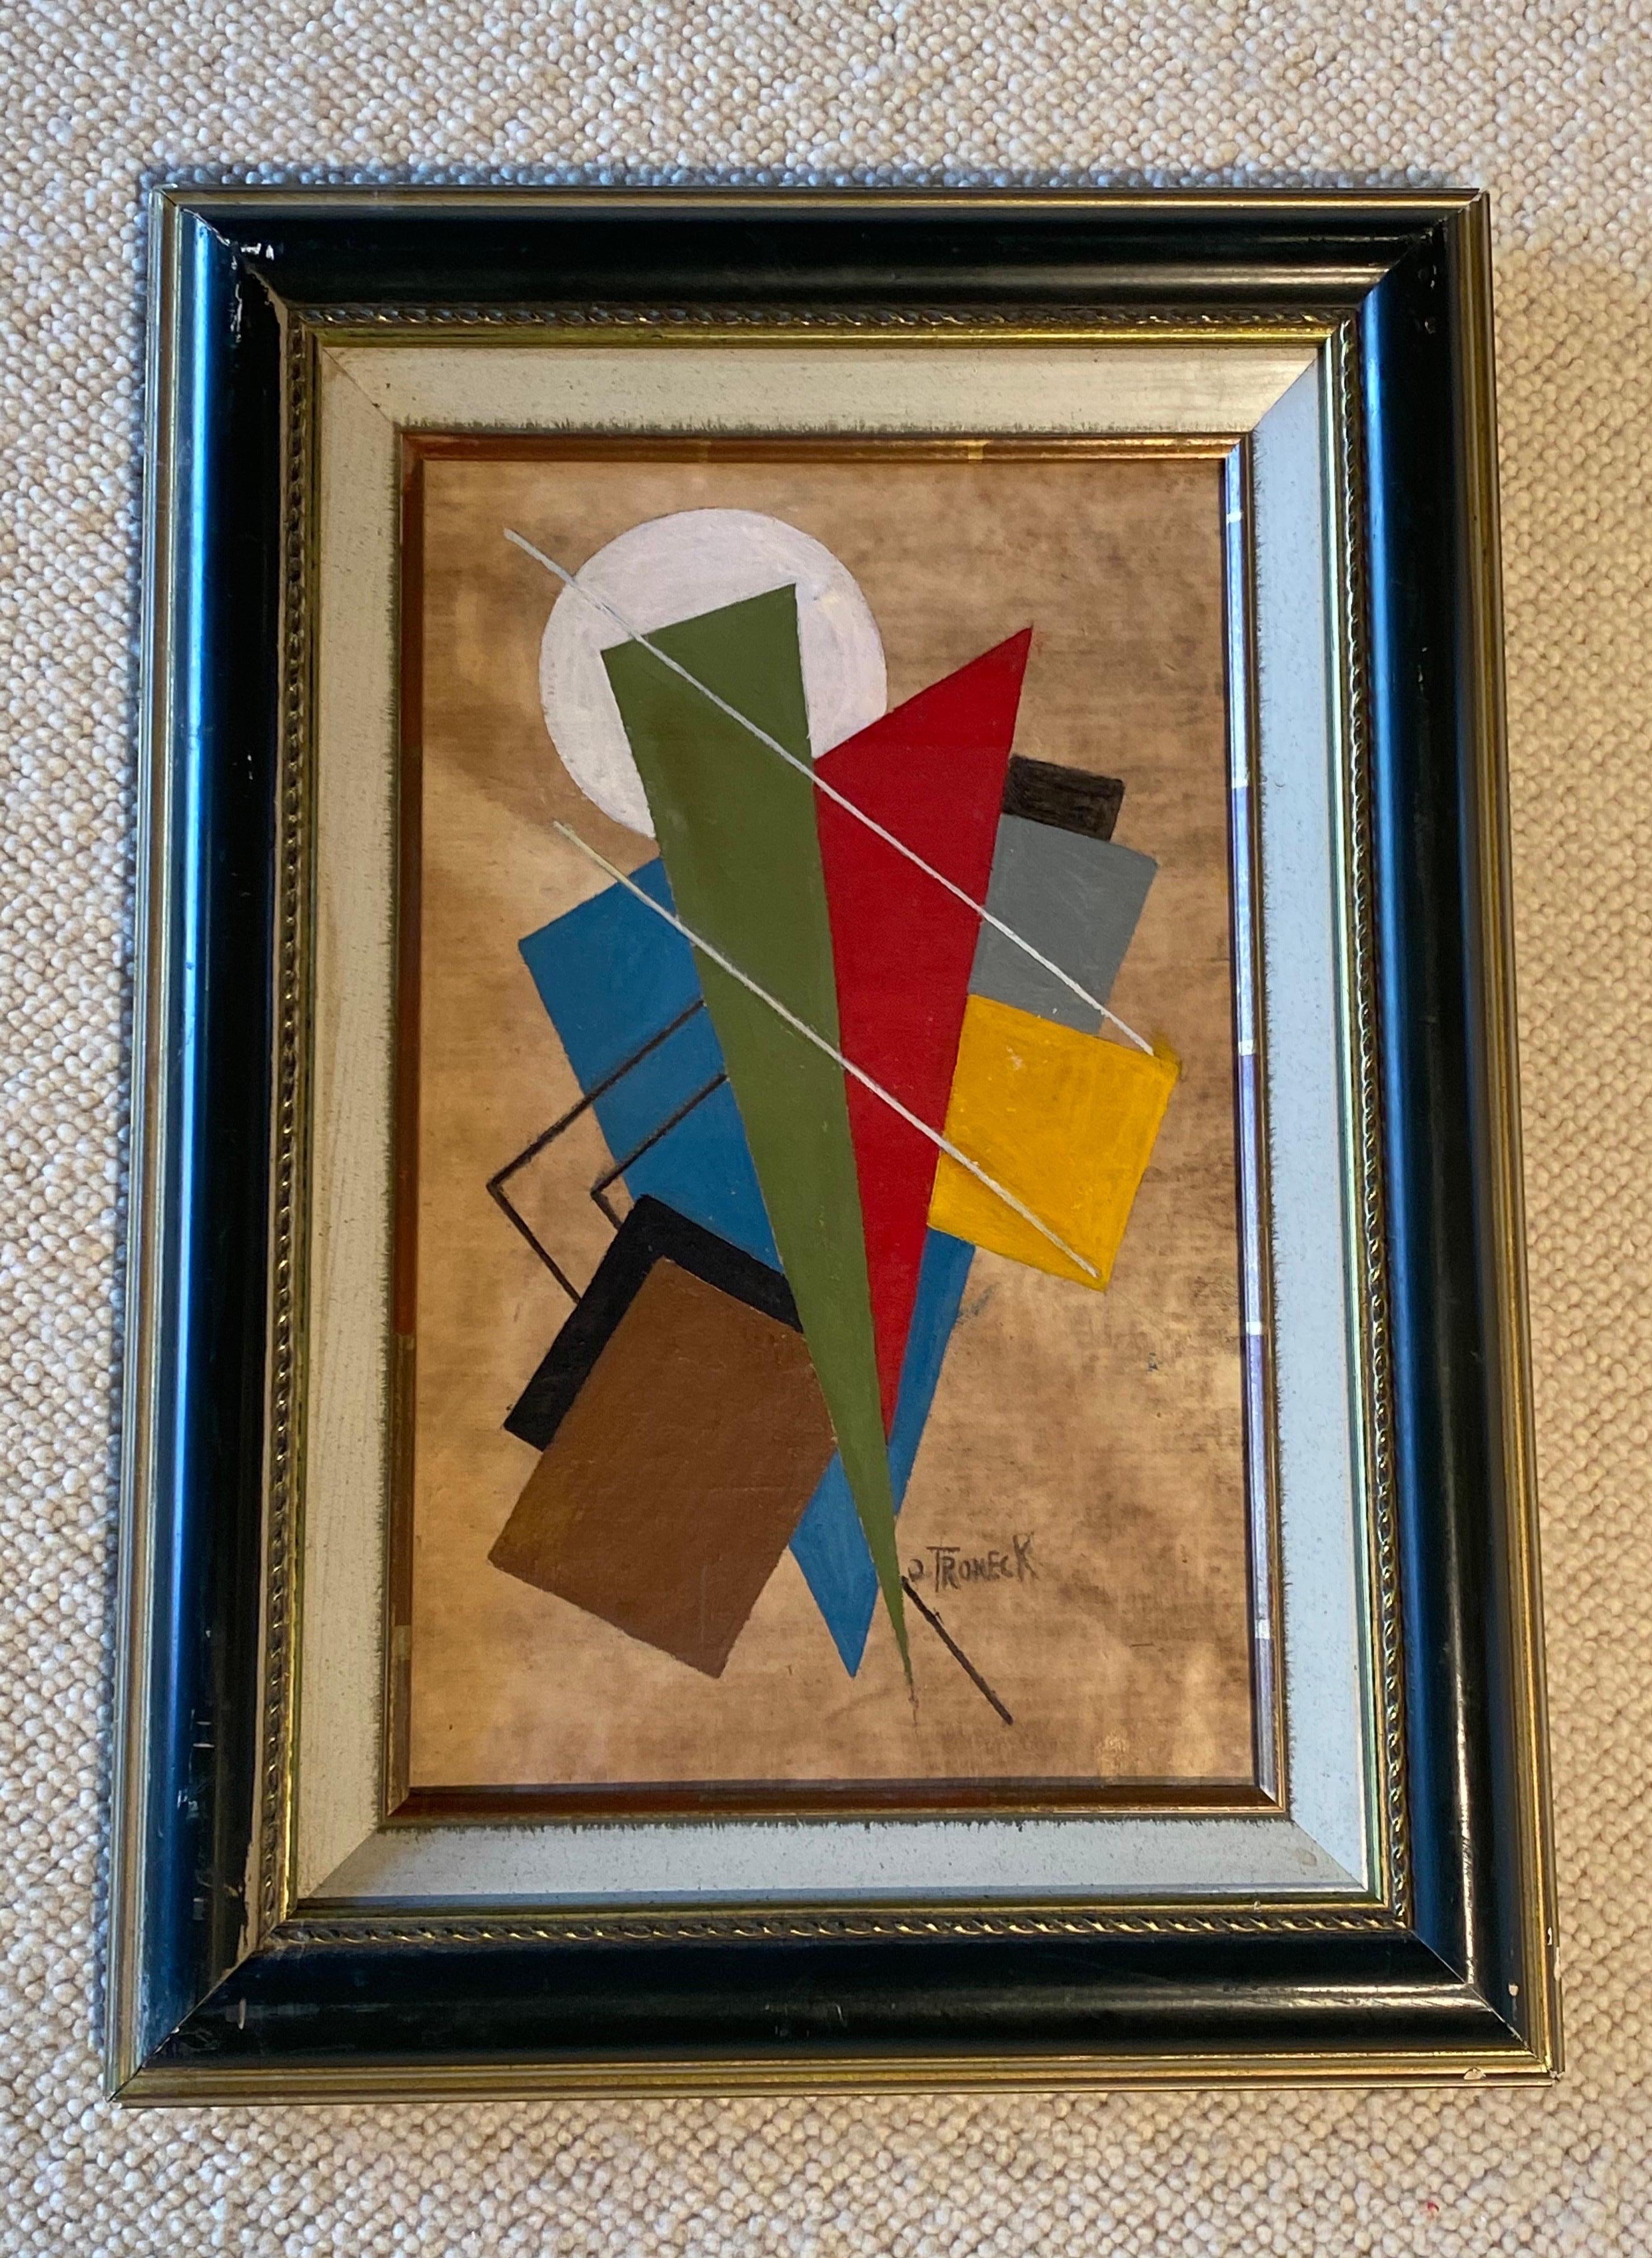 Oscar Troneck constructivism oil on canvas.
Origina  greenl wood frame and glass, circa 1960-1970
Good vintage condition.